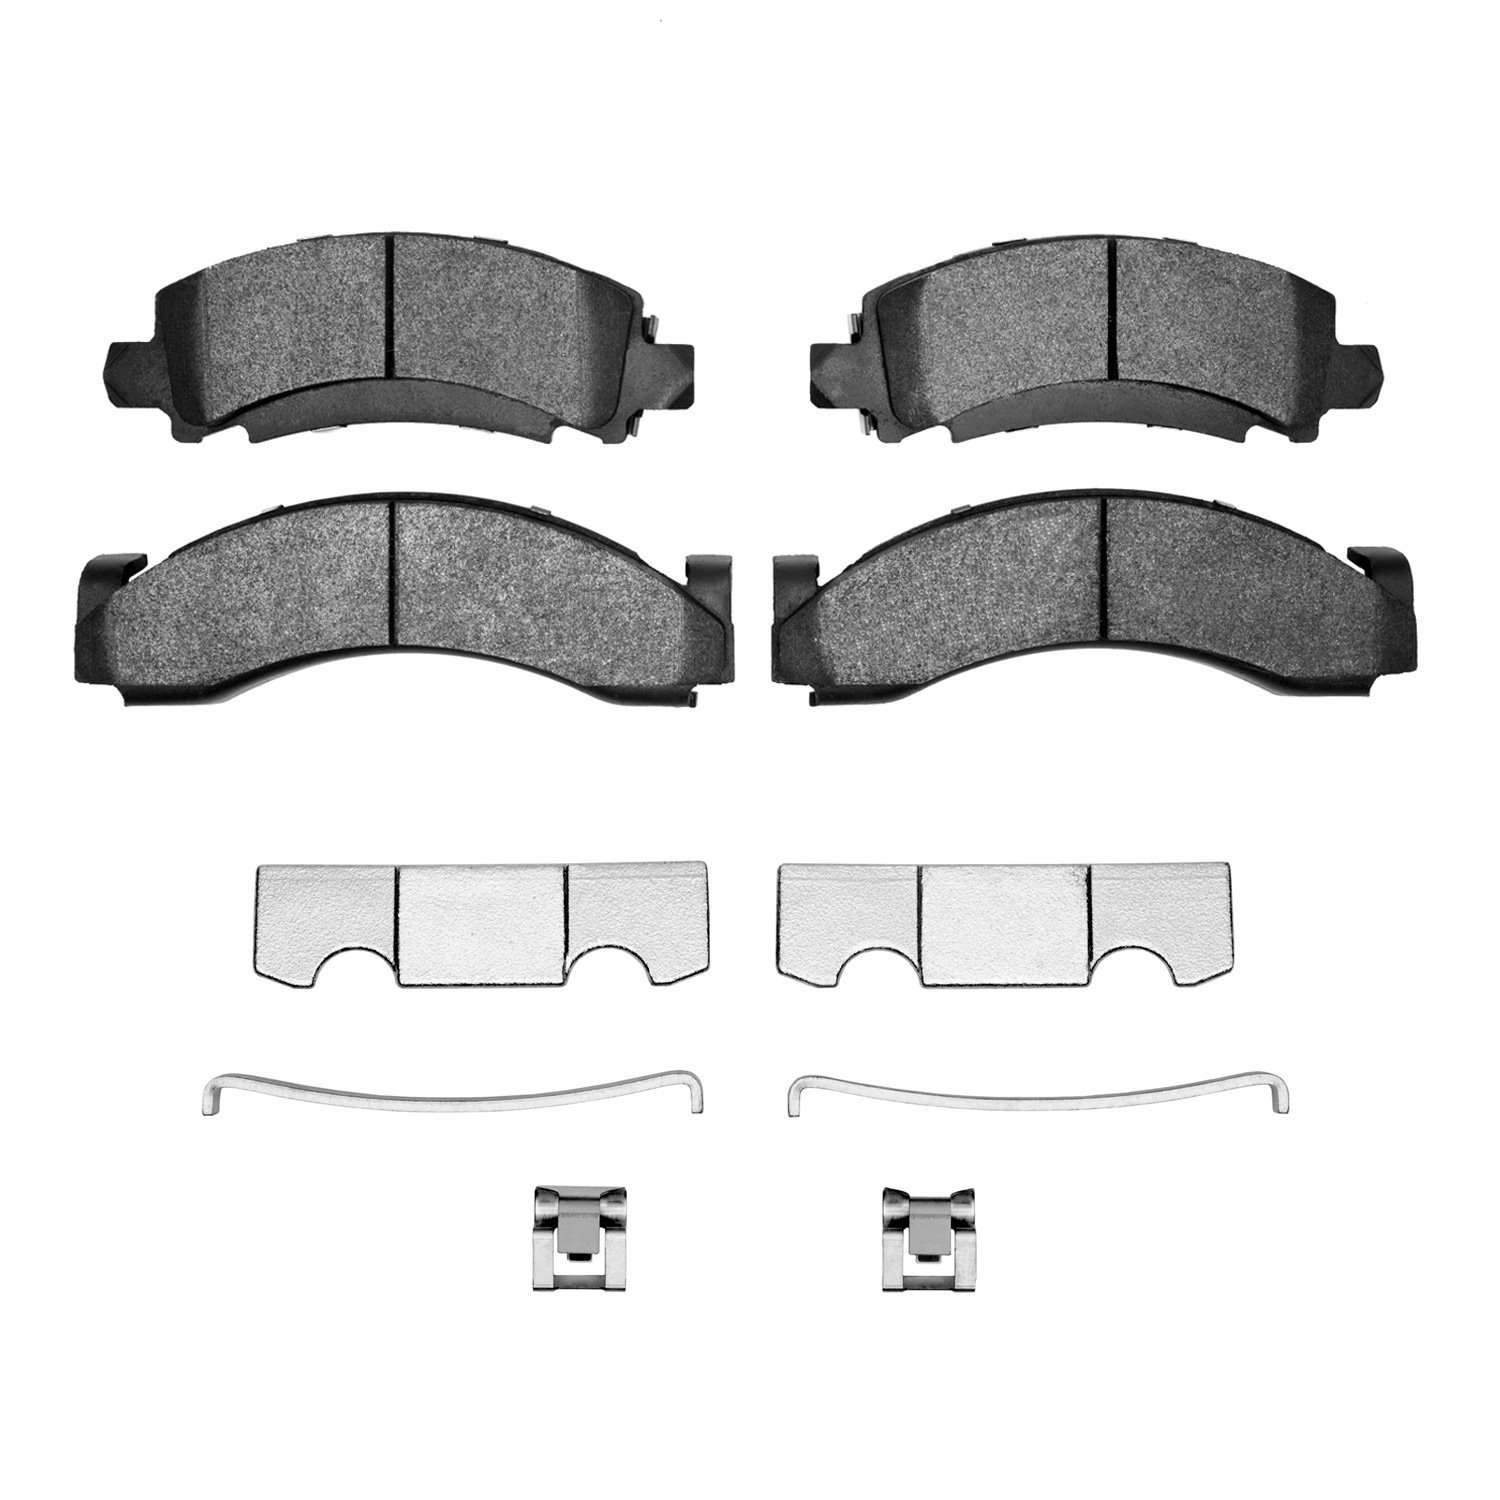 Optimum OE Brake Pads & Hardware Kit, 1971-2005 Fits Multiple Makes/Models, Position: Front & Rear